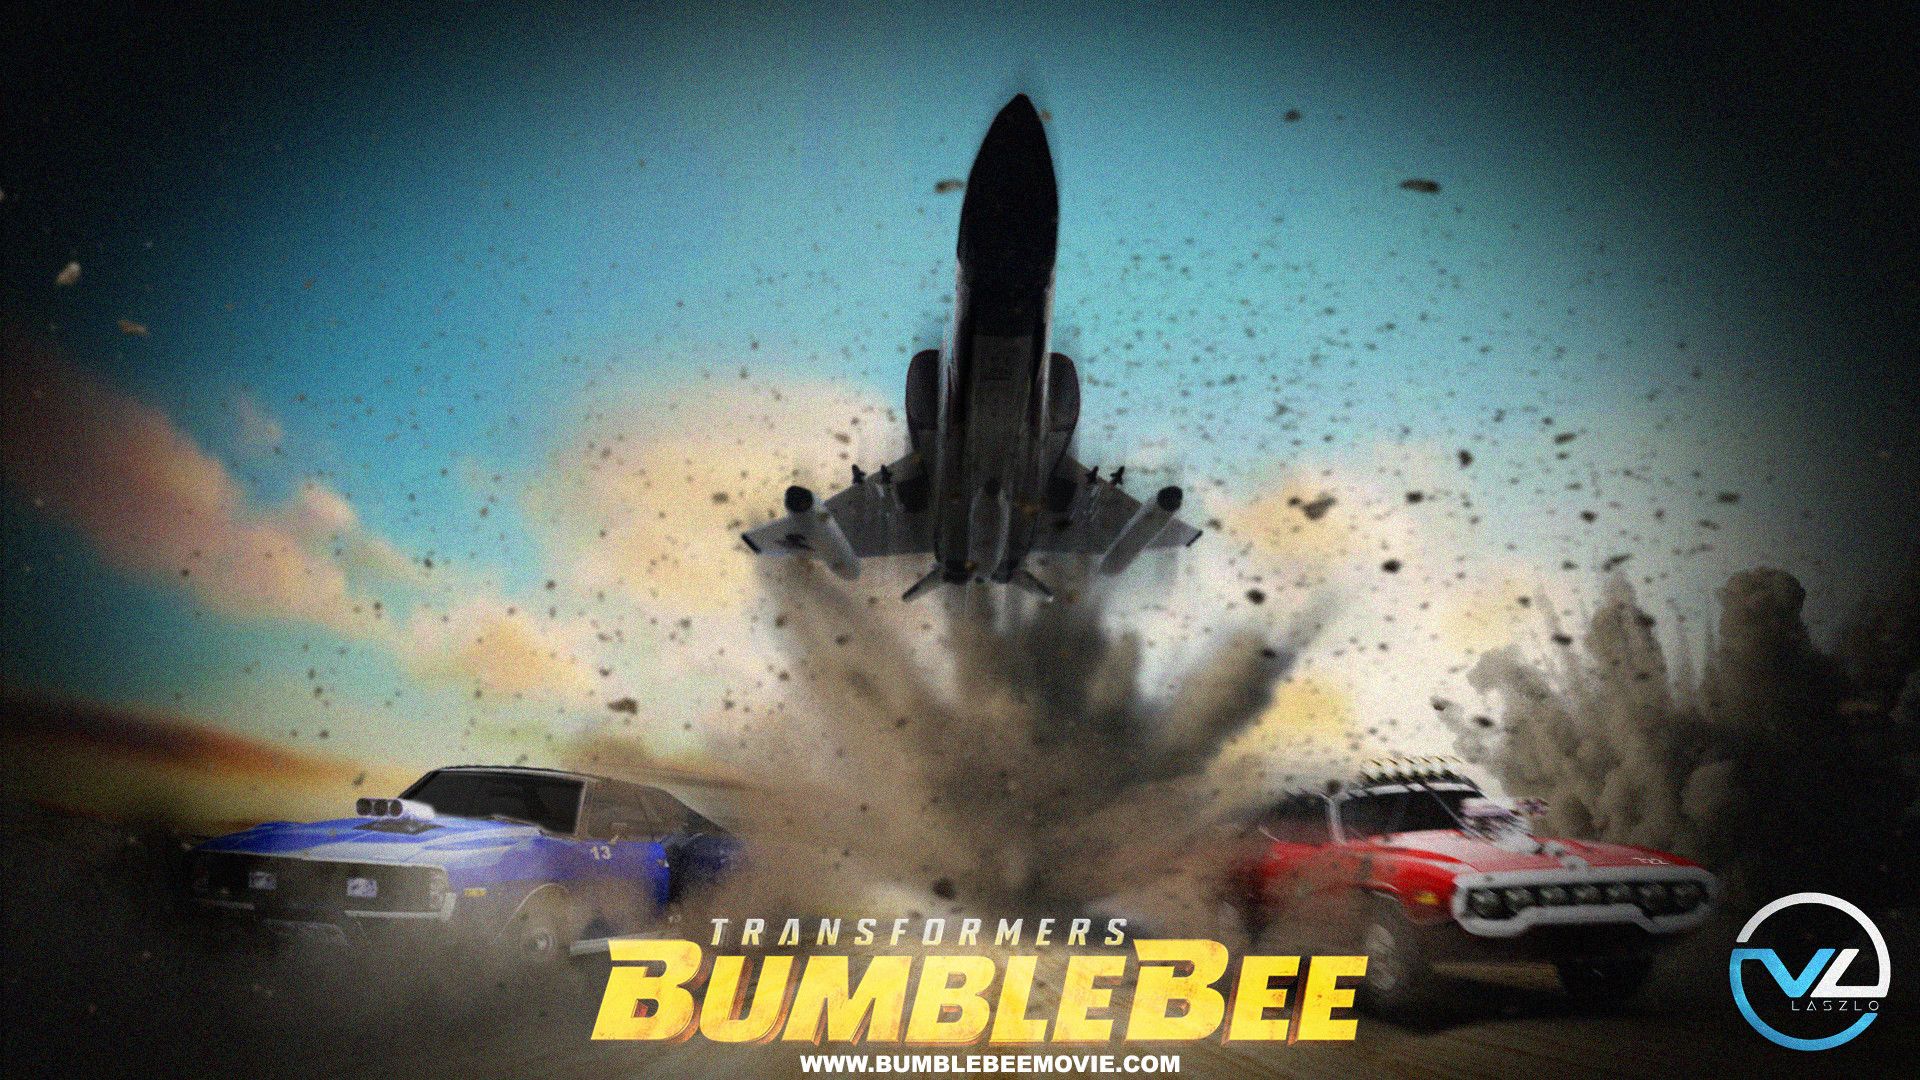 Bumblebee The Movie Poster, Laszlo Ven